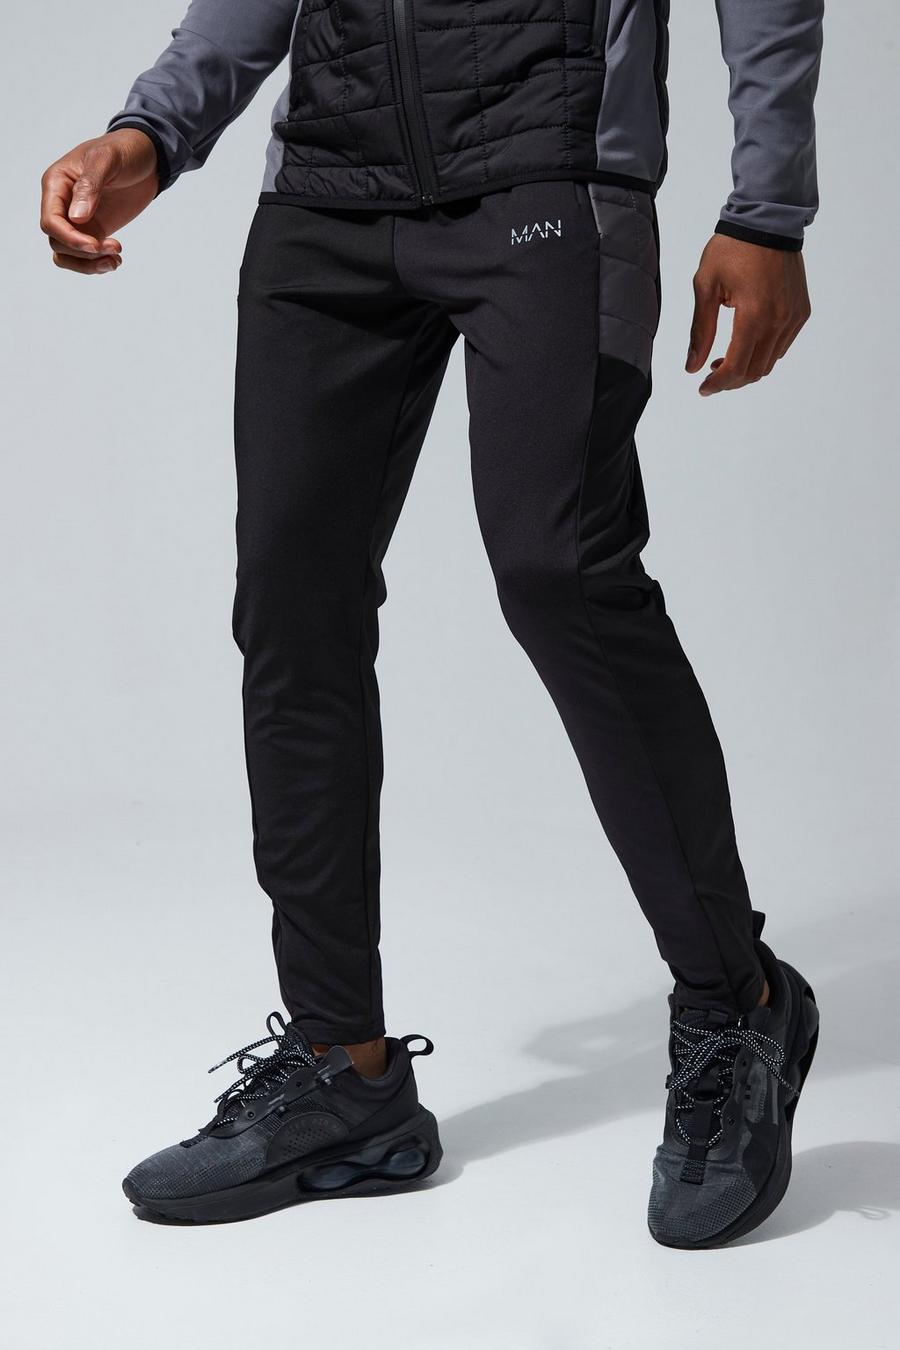 Pantaloni tuta Skinny Fit Man Active Hybrid trapuntati, Black nero